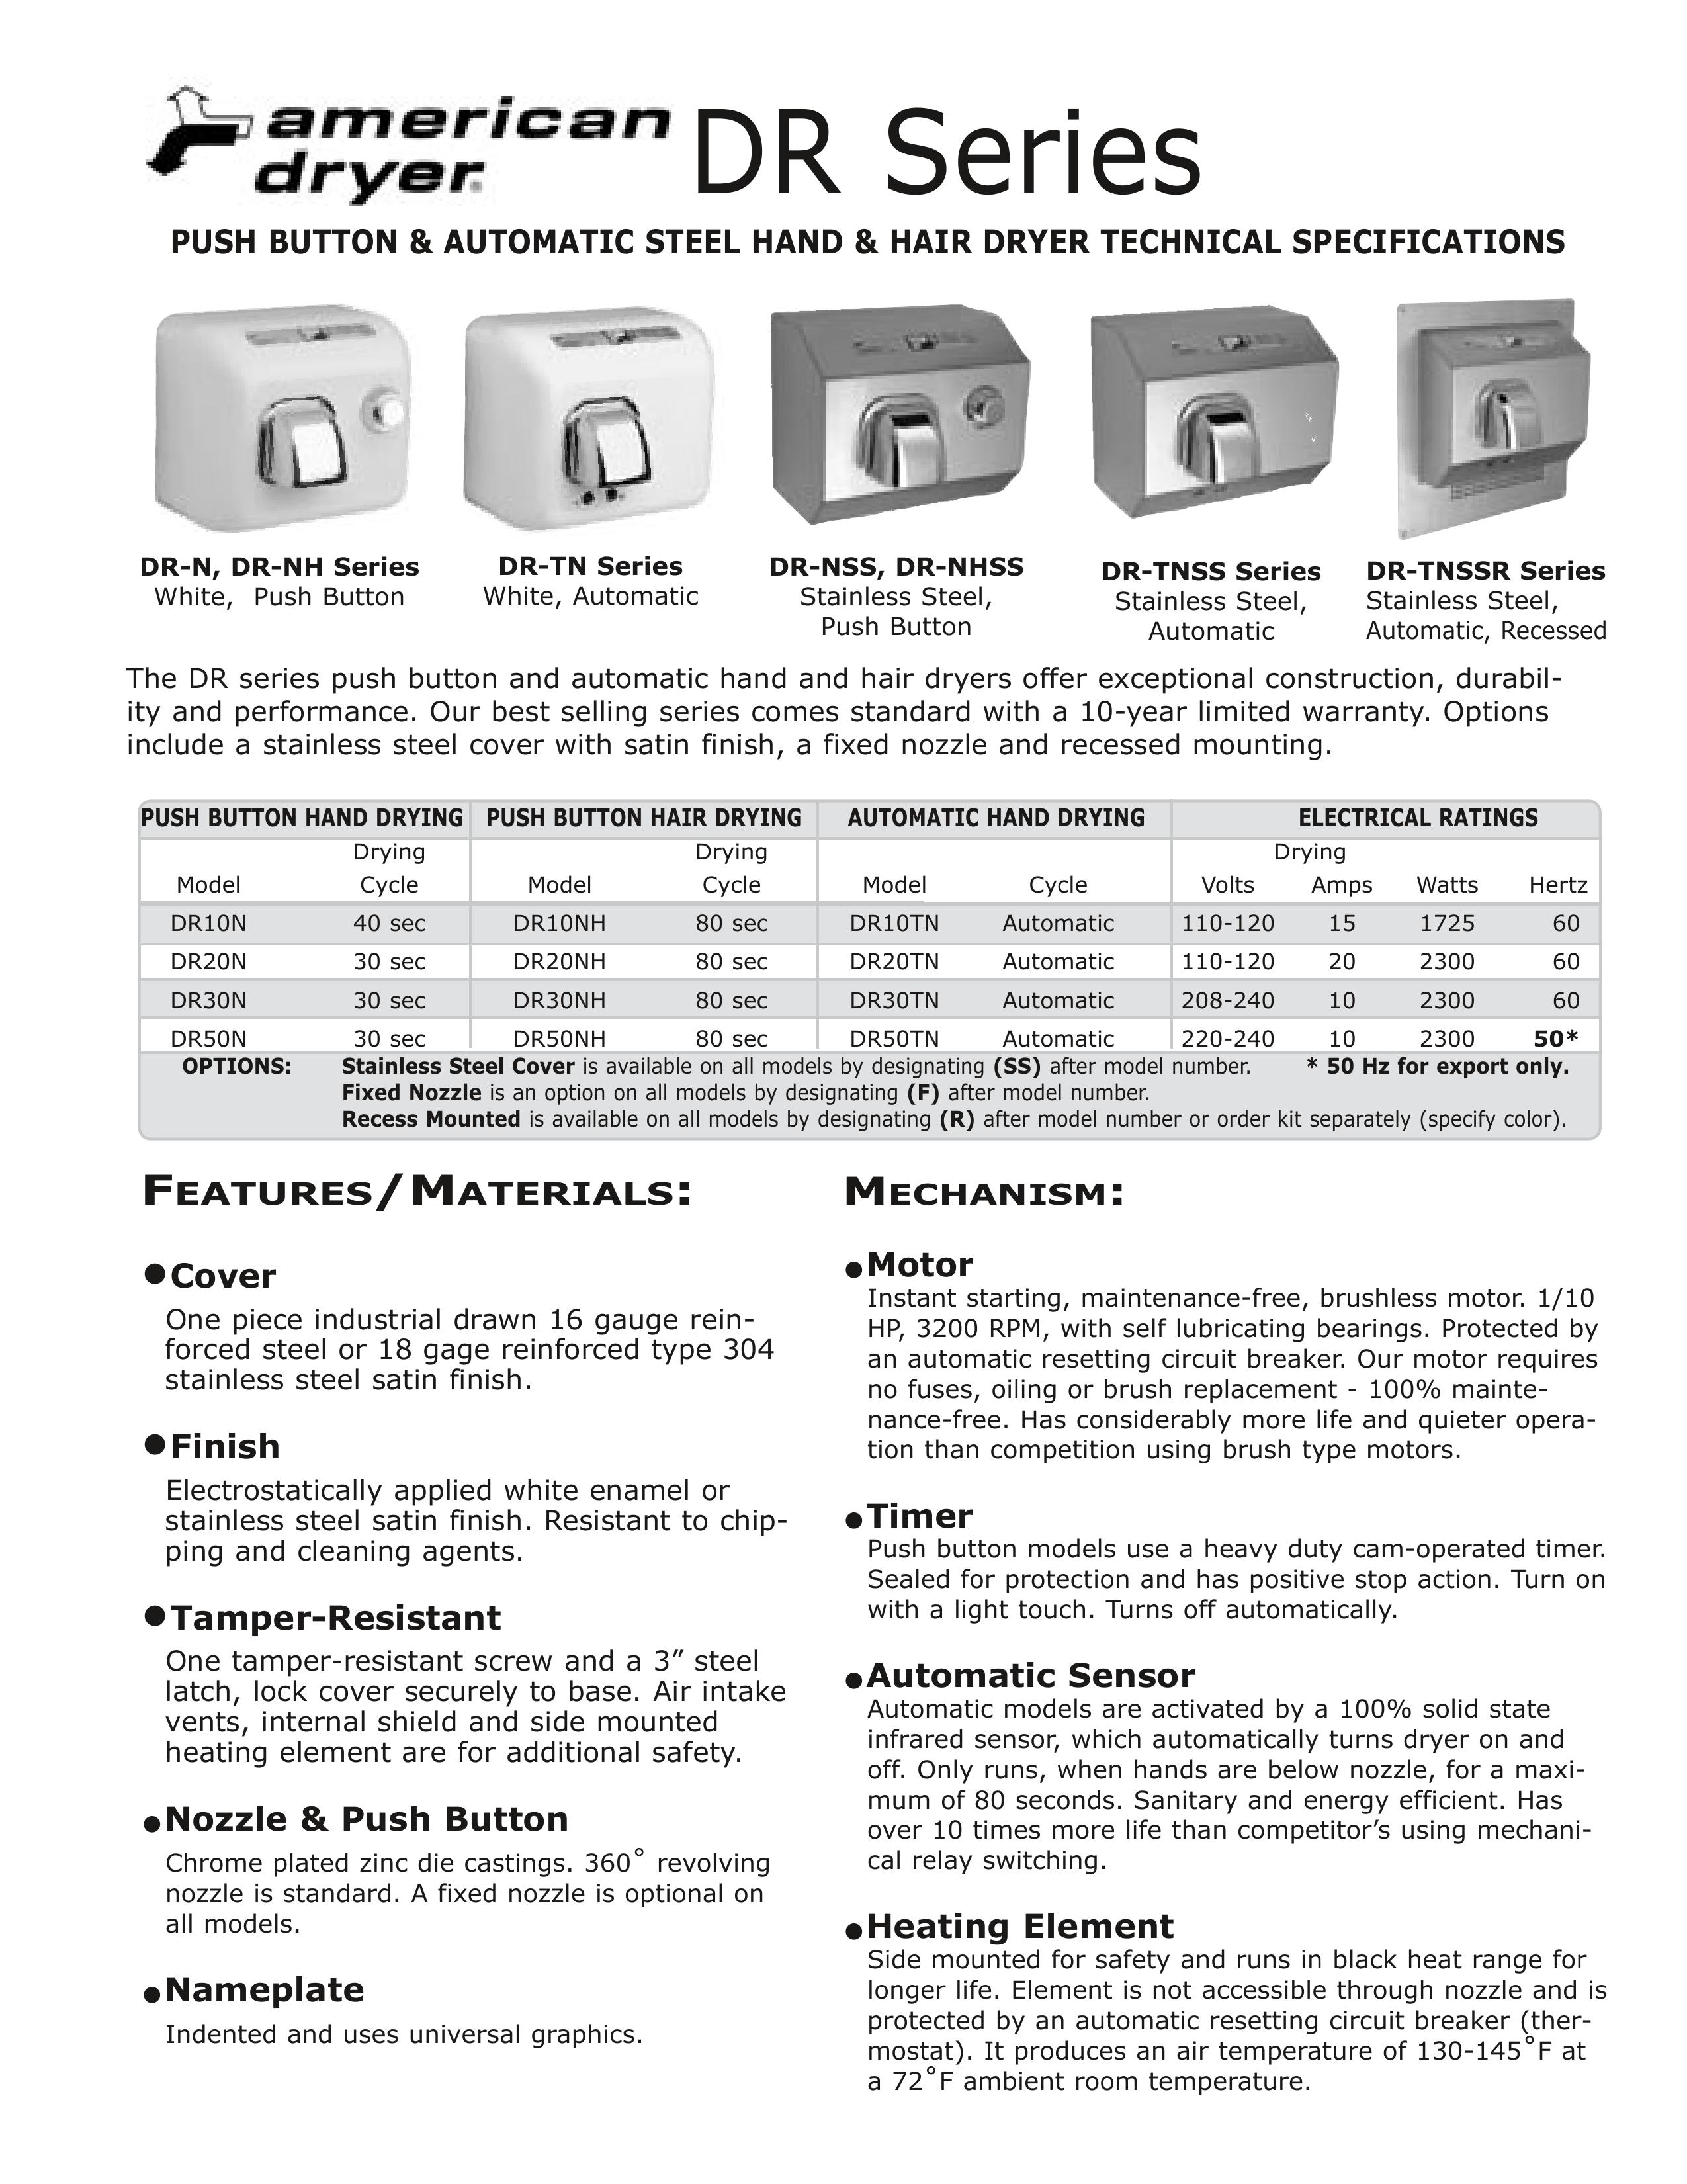 American Dryer DR-NHSS Hair Dryer User Manual